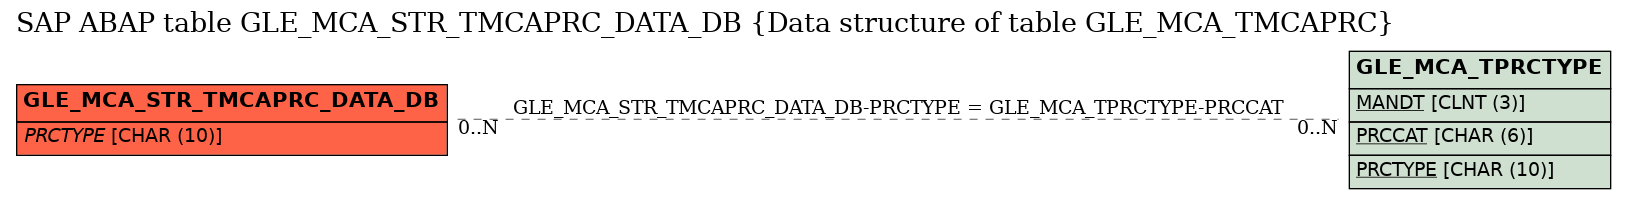 E-R Diagram for table GLE_MCA_STR_TMCAPRC_DATA_DB (Data structure of table GLE_MCA_TMCAPRC)